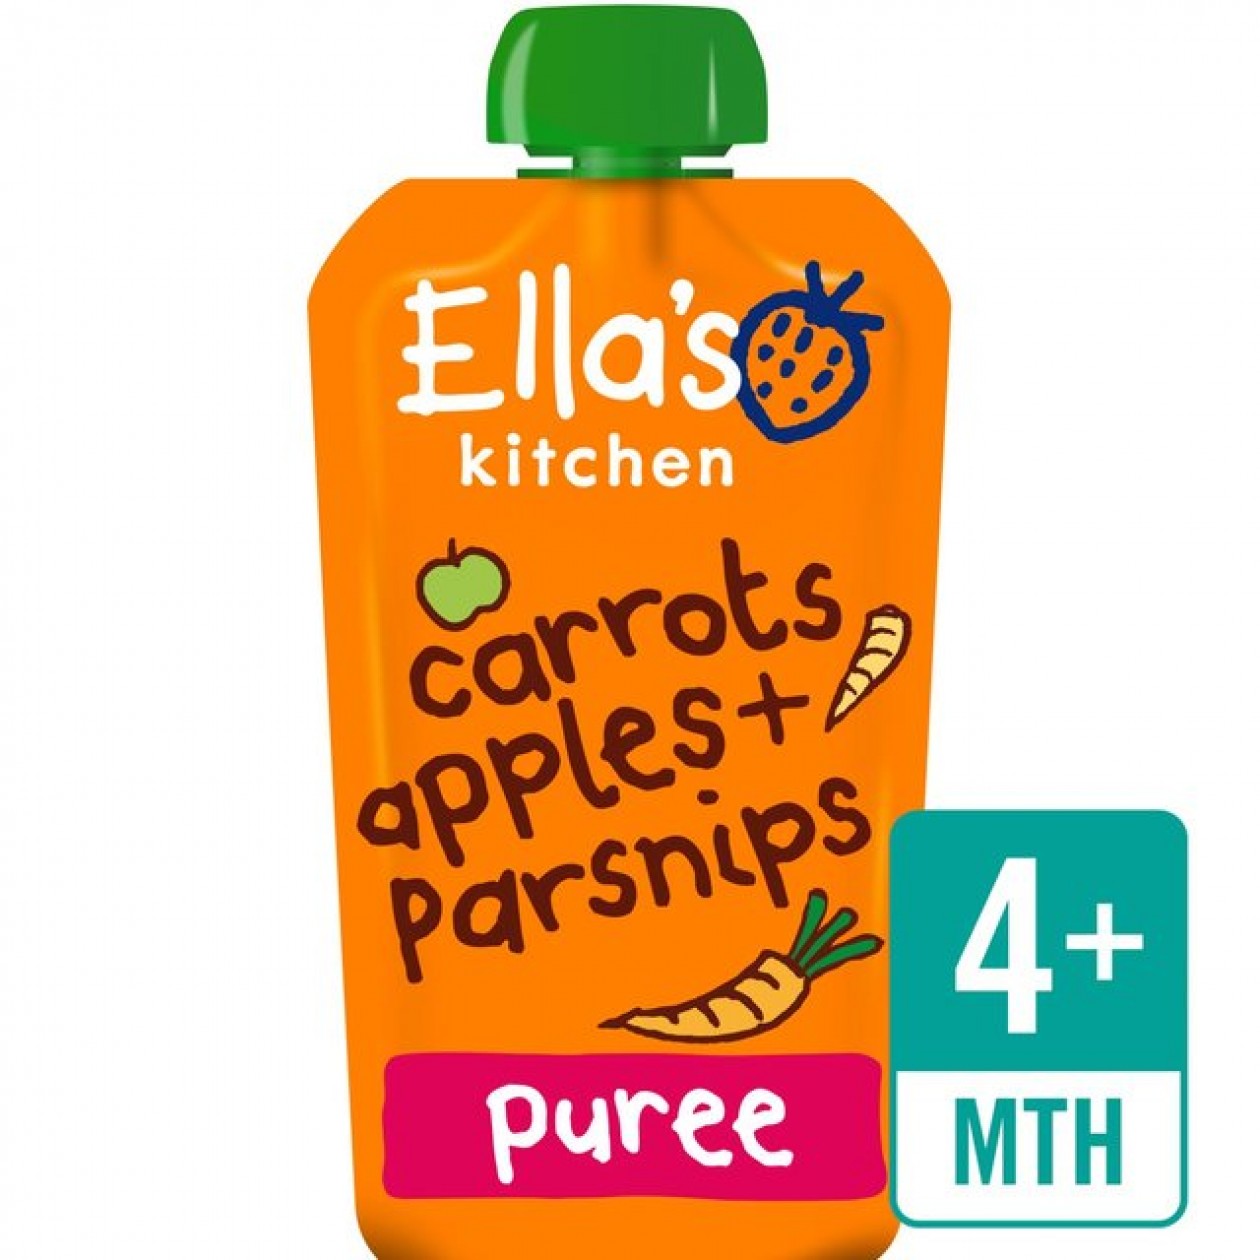 Ella's Kitchen Carrots apples + parsnips 7x 120G